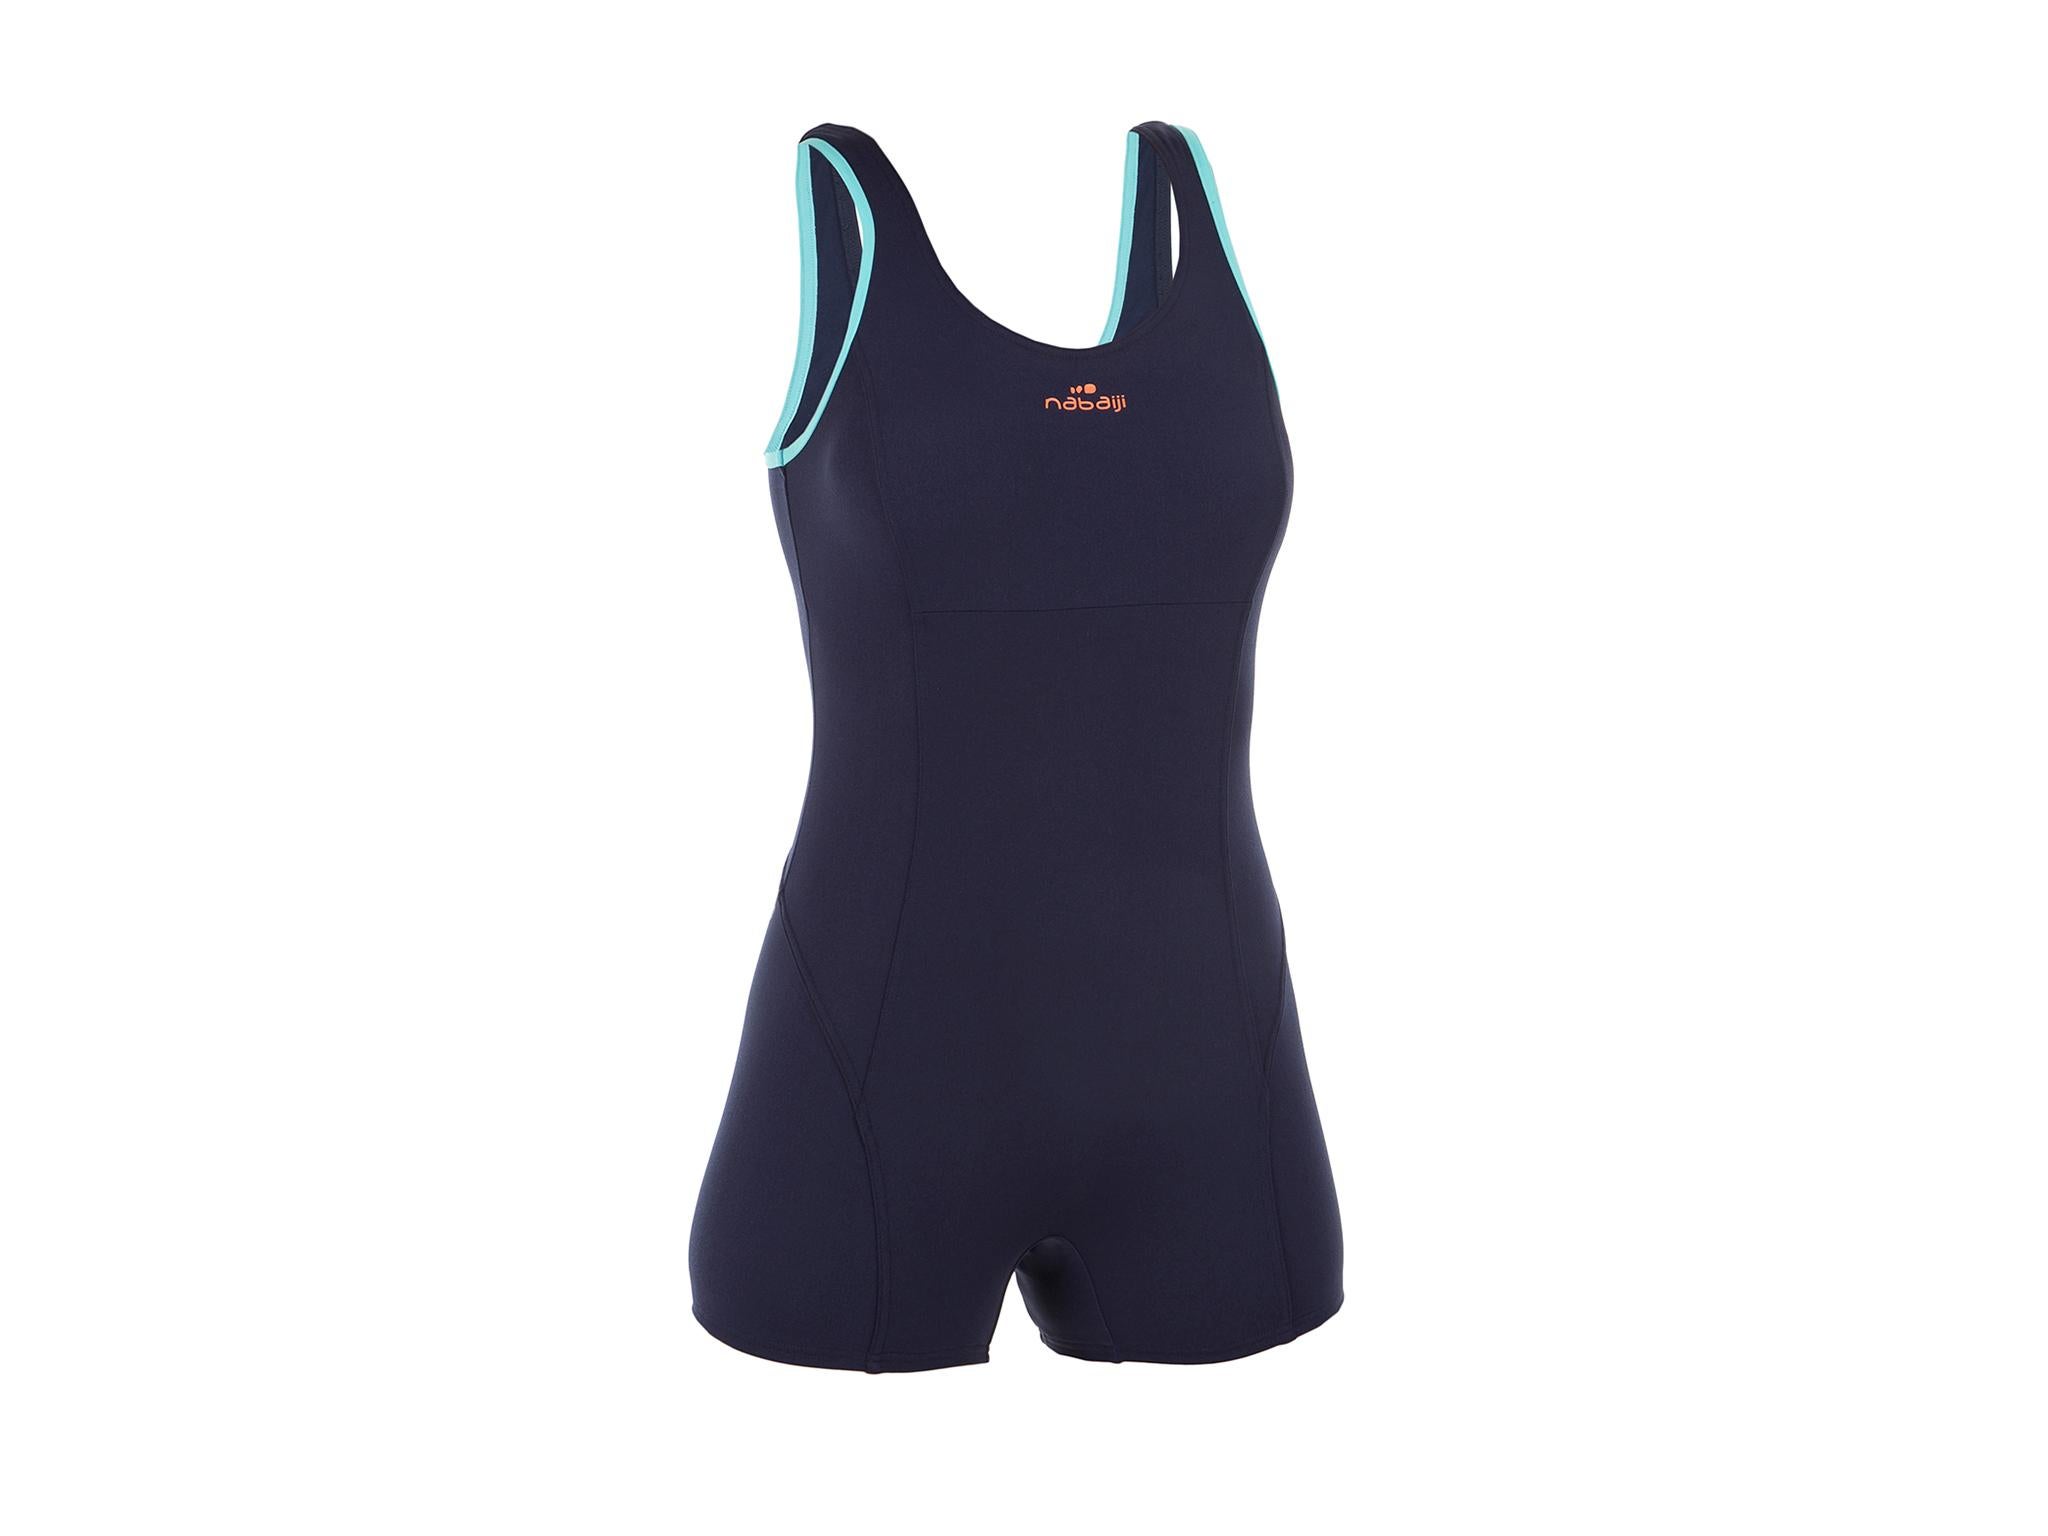 swimming dress for ladies decathlon